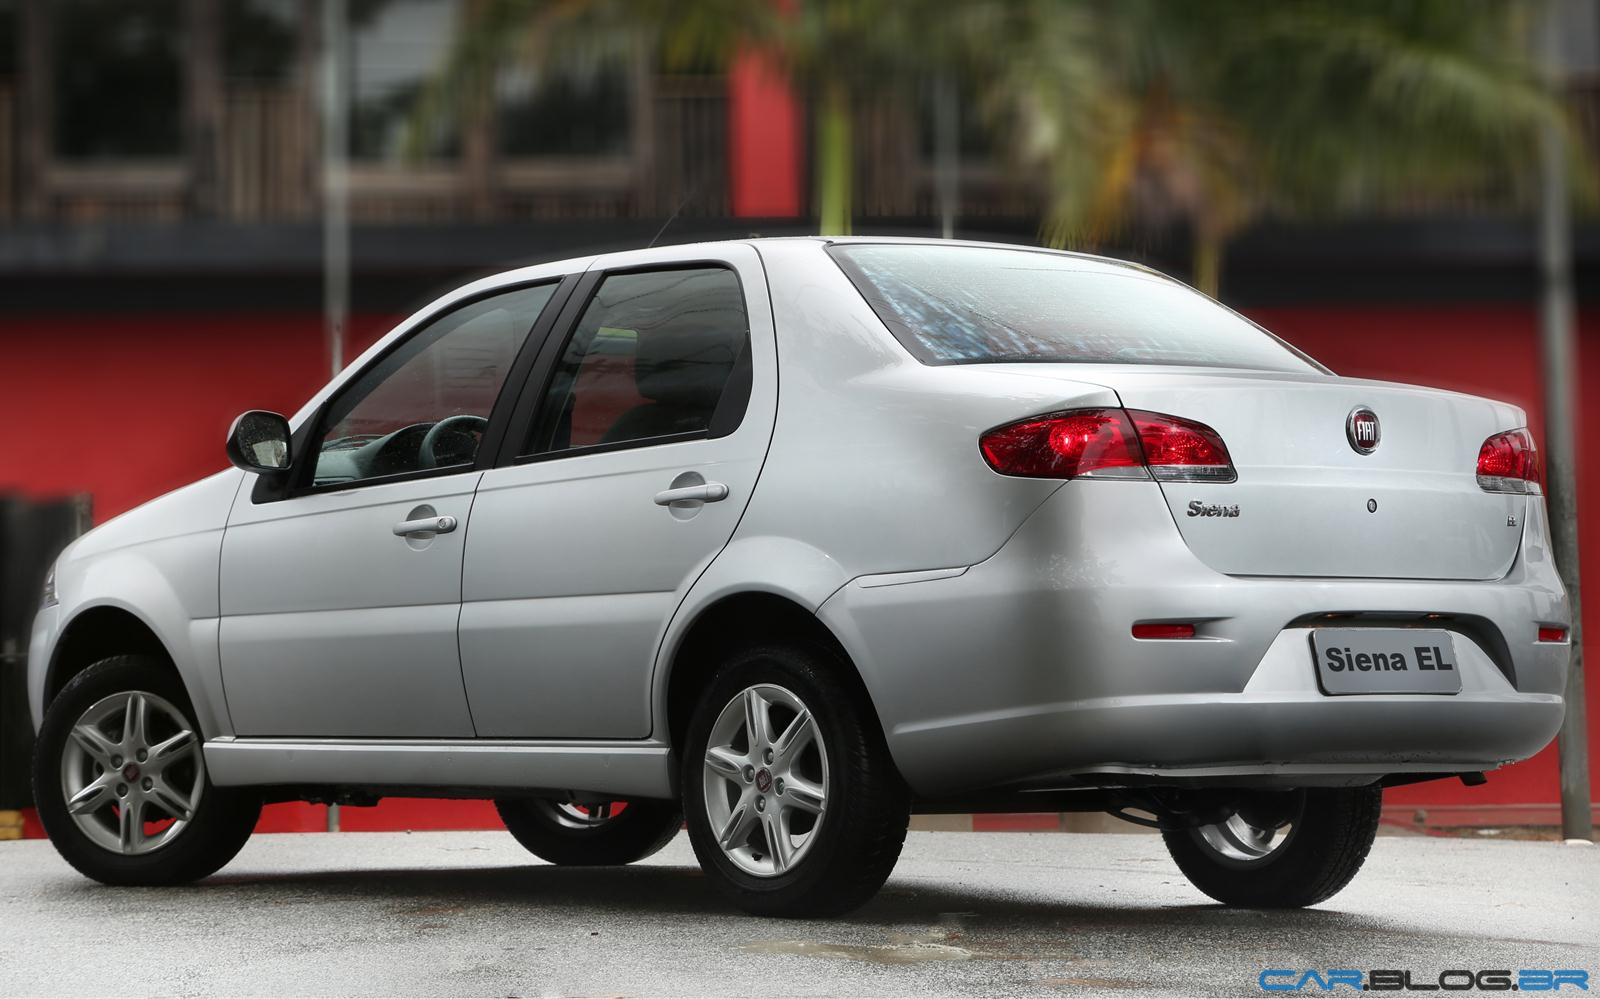 Fiat-Siena-EL-2013-perfil-traseiro.jpg